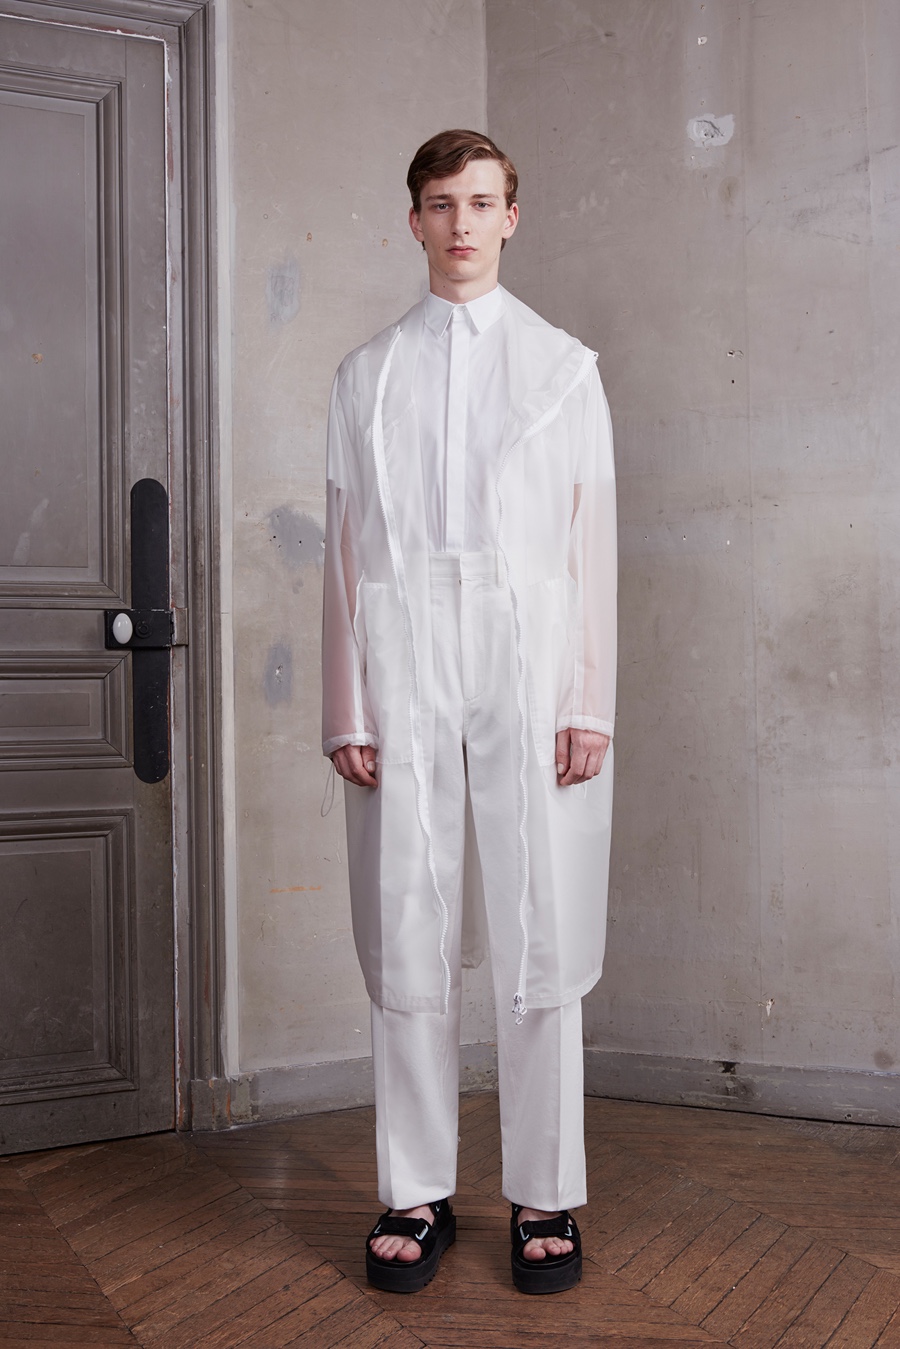 Off-White Spring/Summer 2016 Menswear Collection | Paris Fashion Week ...